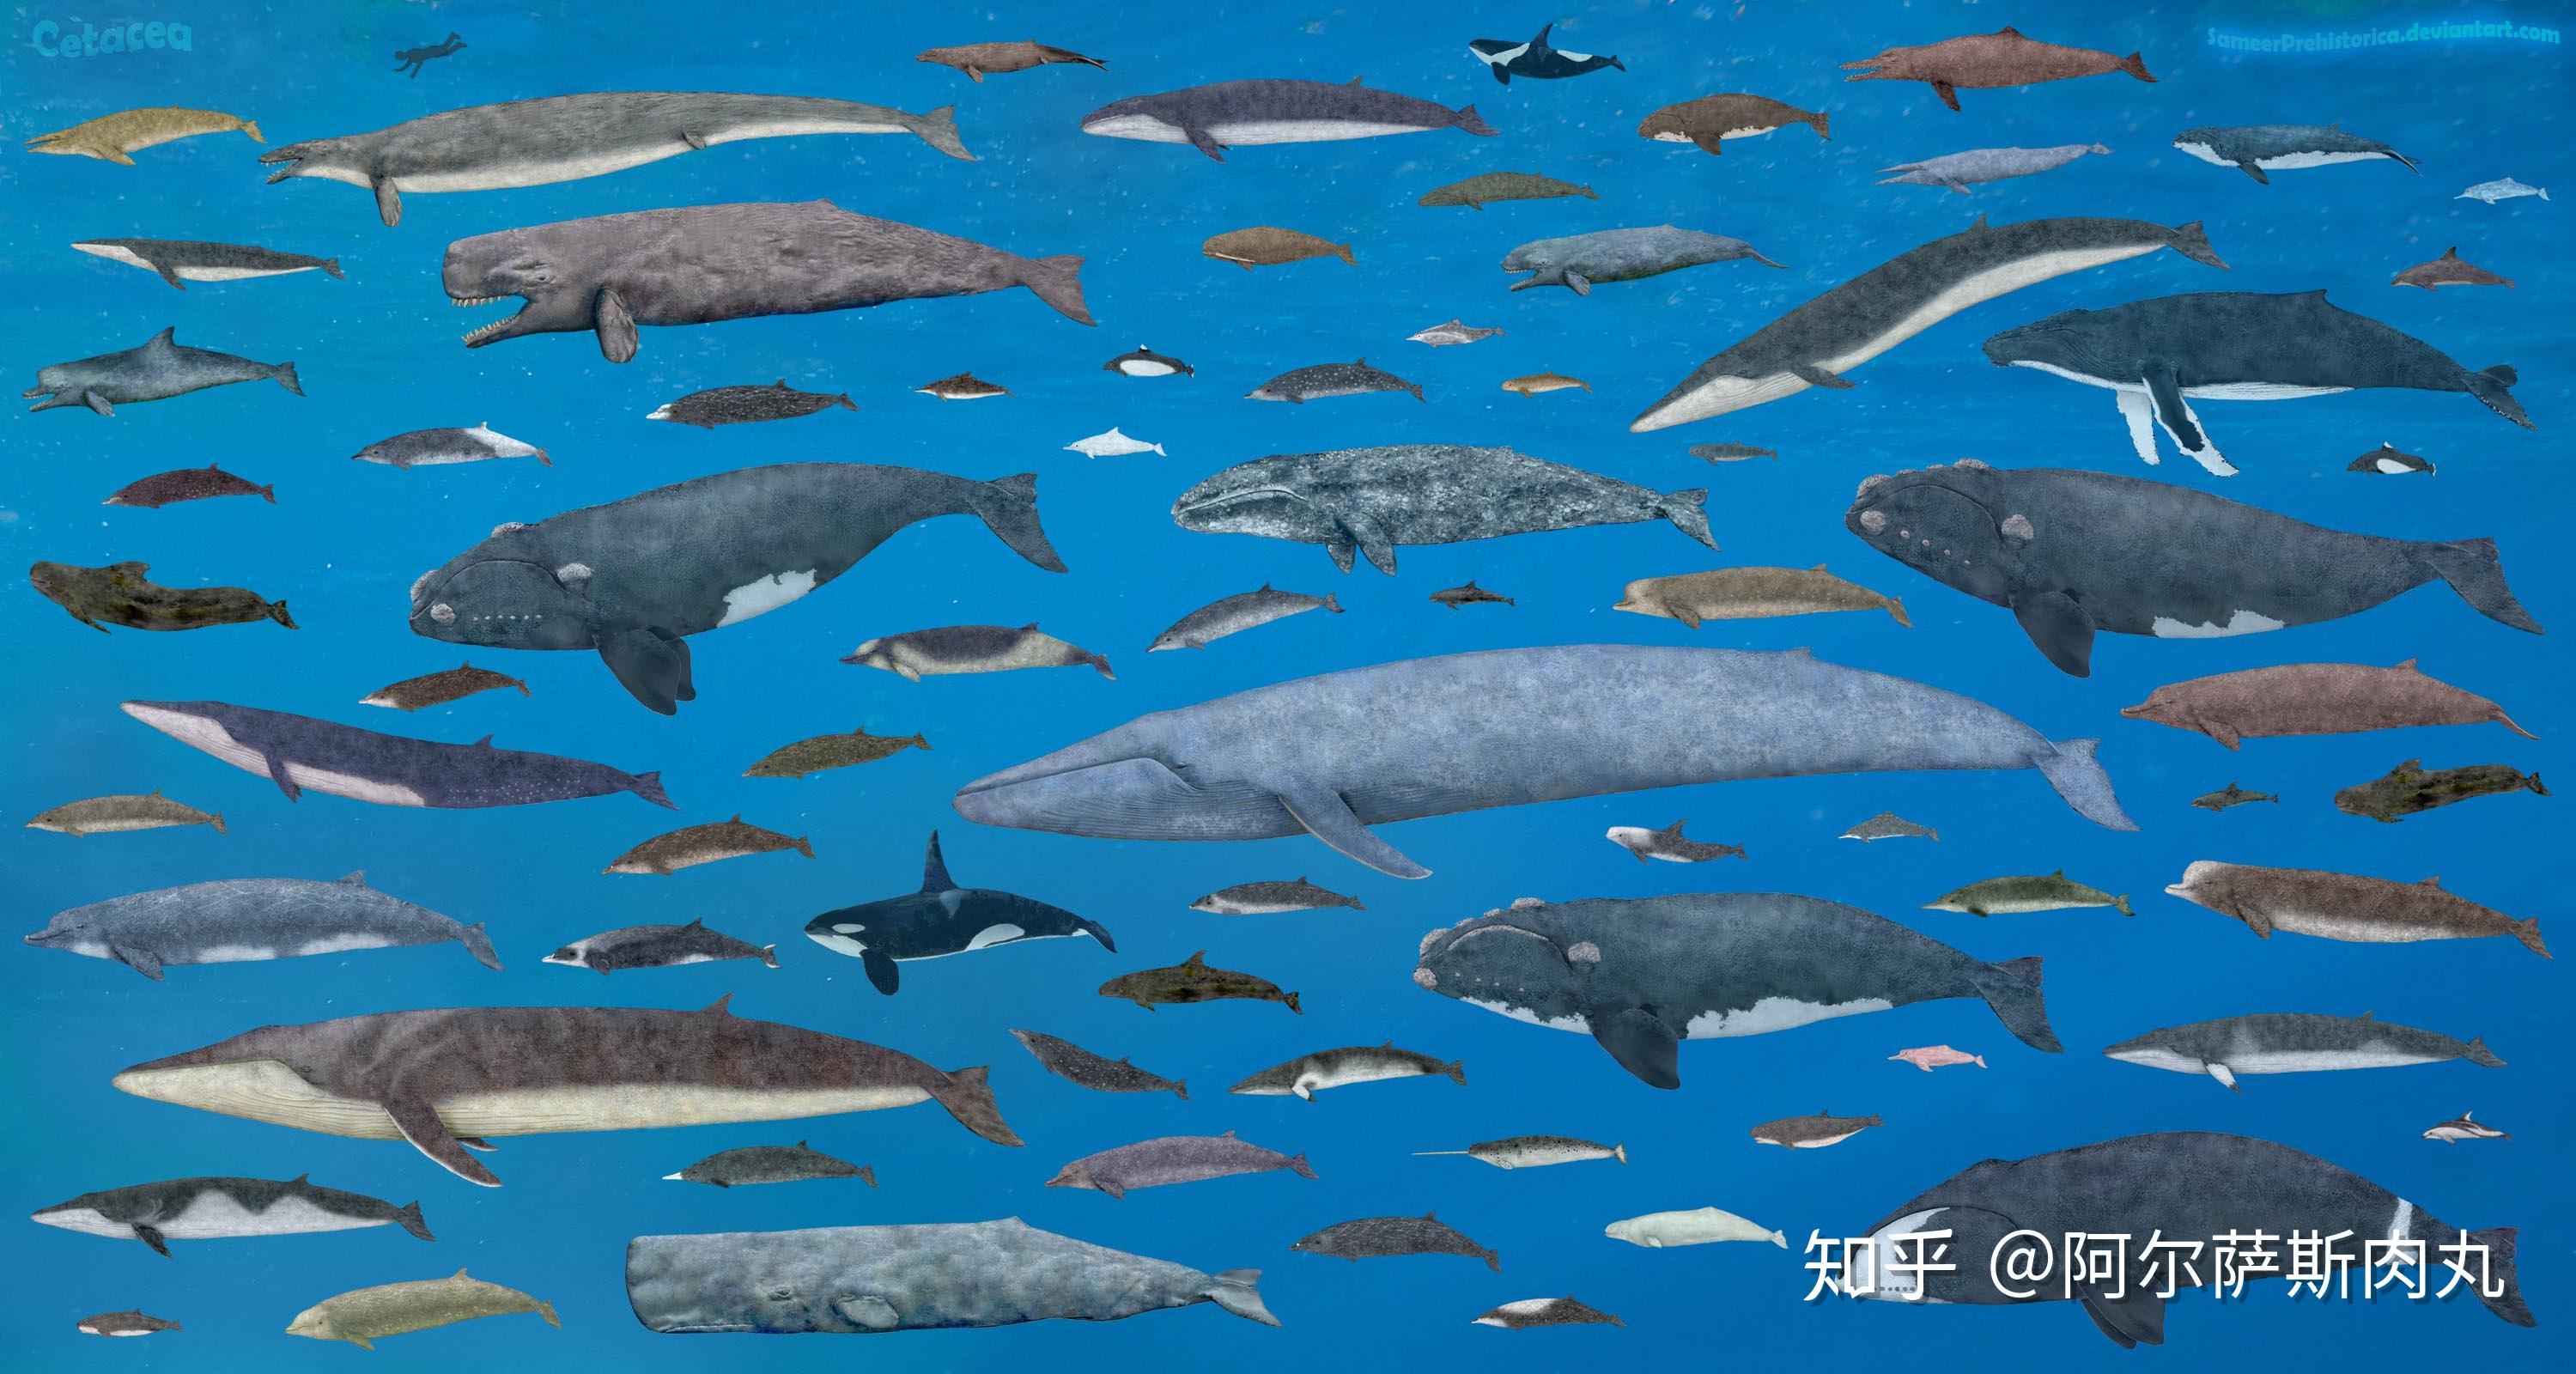 「rise of mammals丨兽族崛起○2」鲸奇档案—鲸类演化漫谈